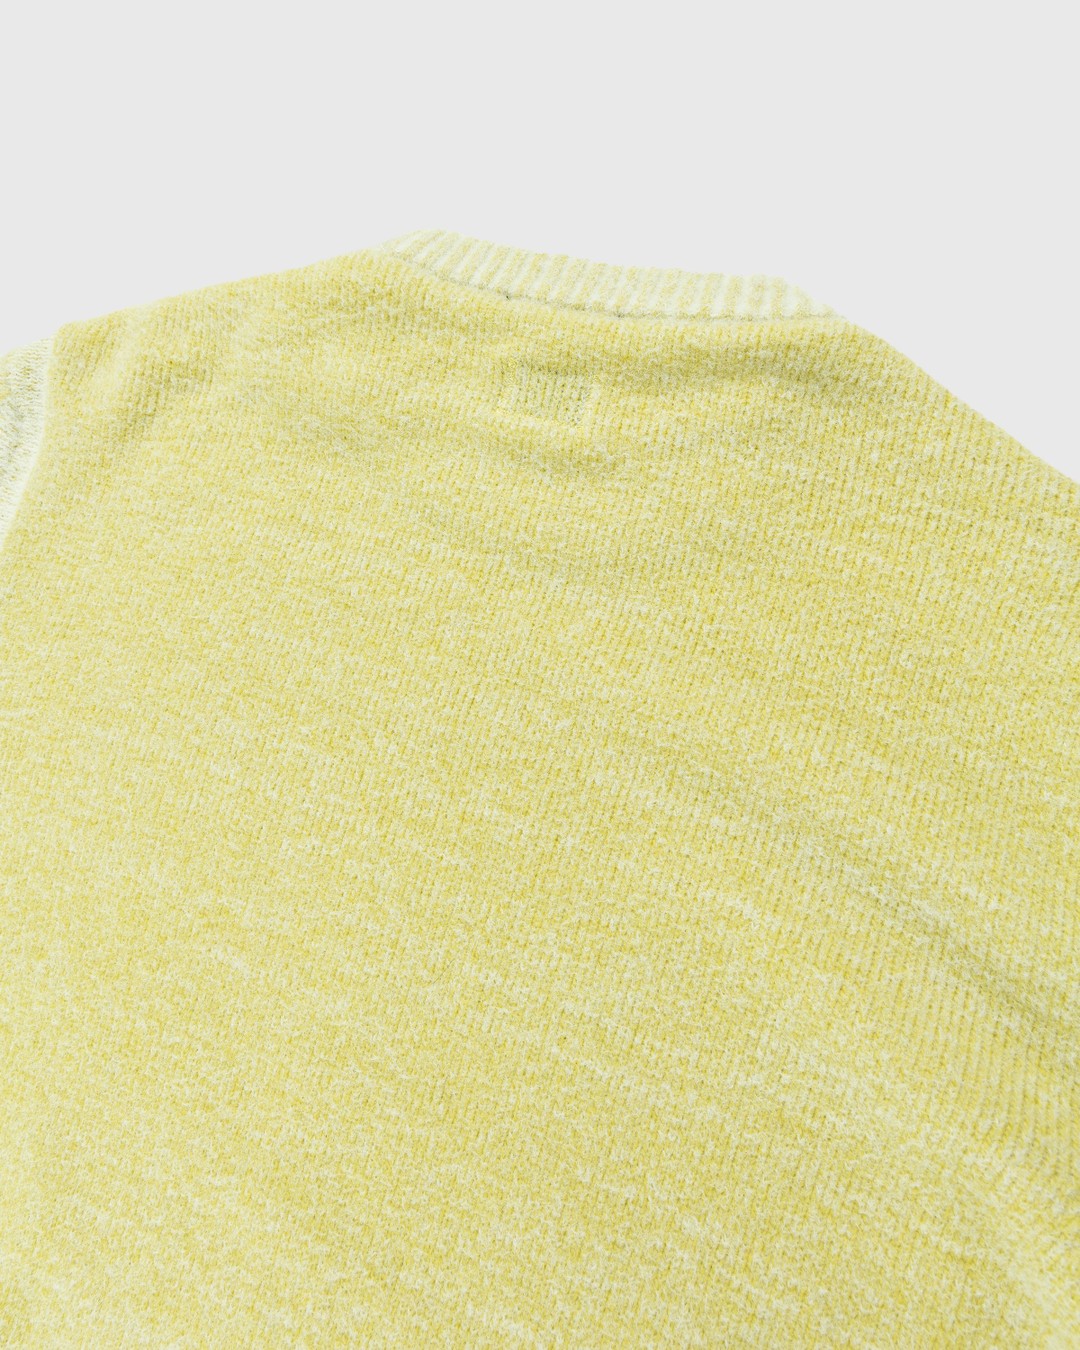 C.P. Company – Fleece Knit Jumper Yellow - Crewnecks - Yellow - Image 4